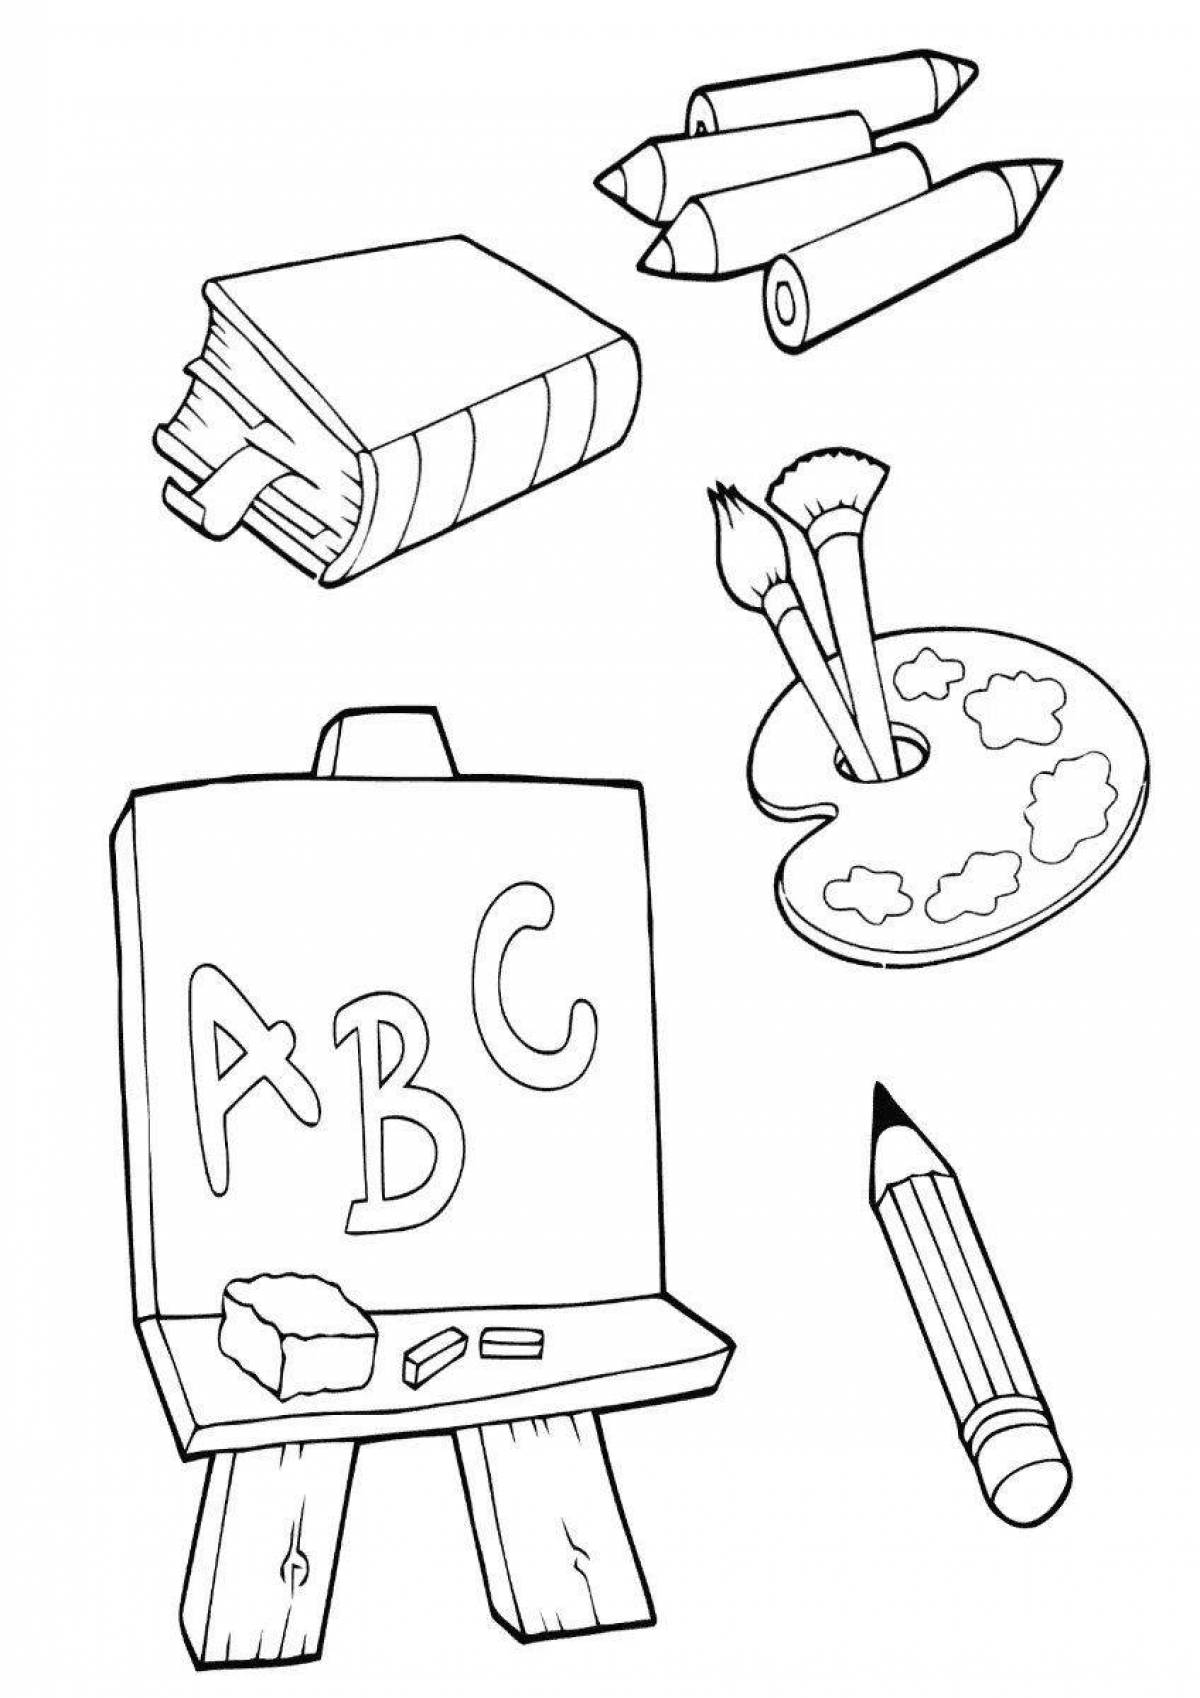 Coloring page joyful school accessories